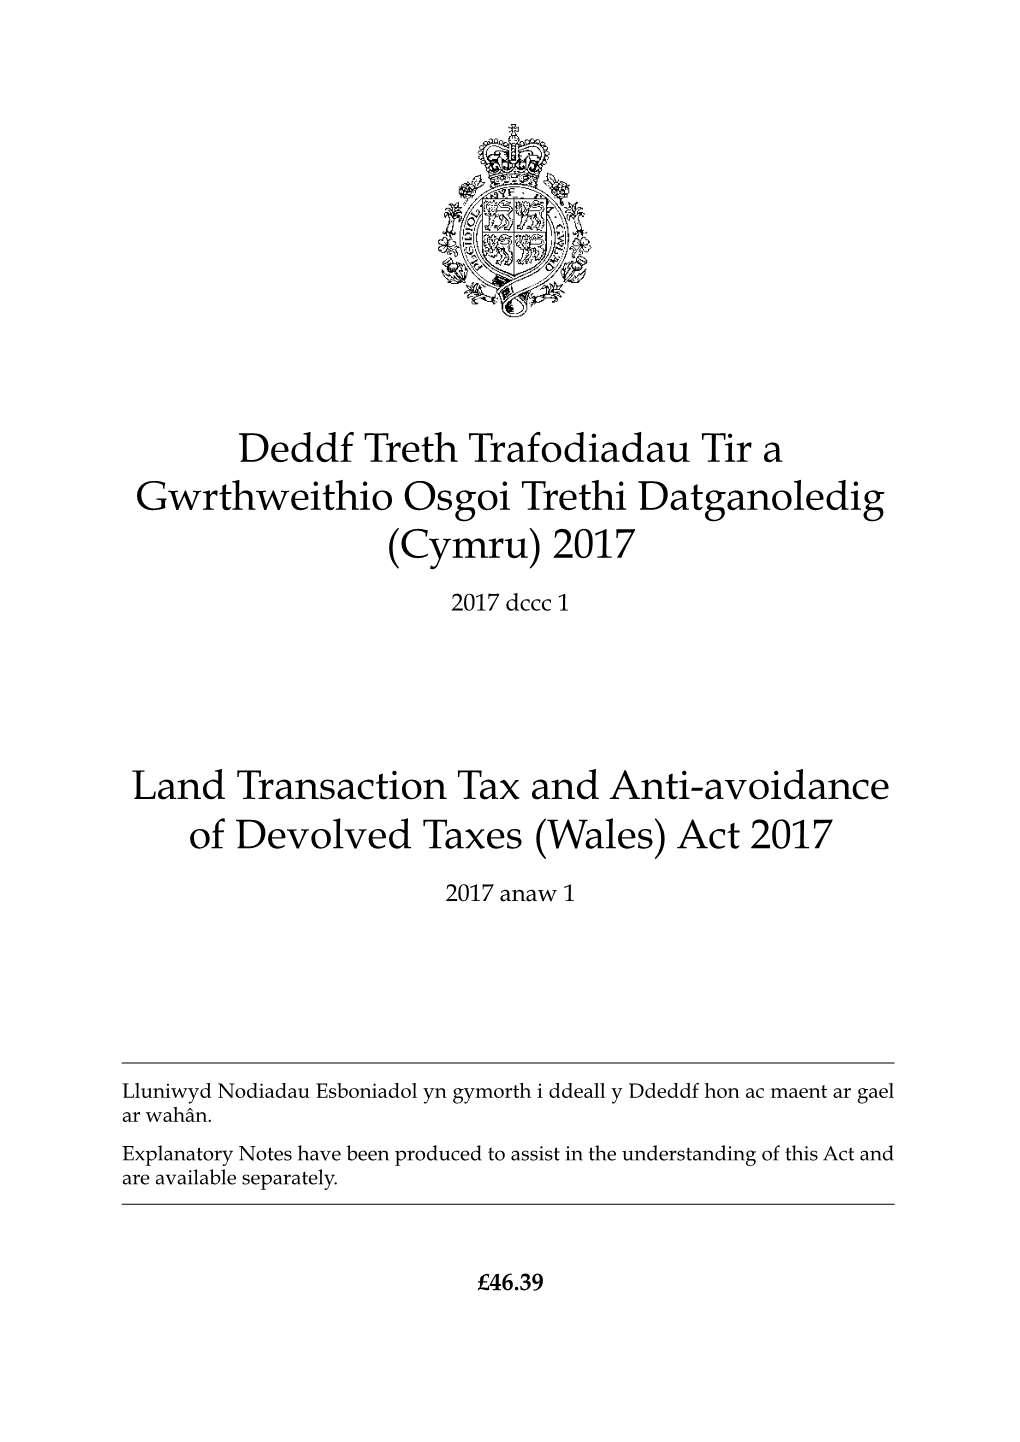 (Cymru) 2017 Land Transaction Tax and Anti-Avoidance Of